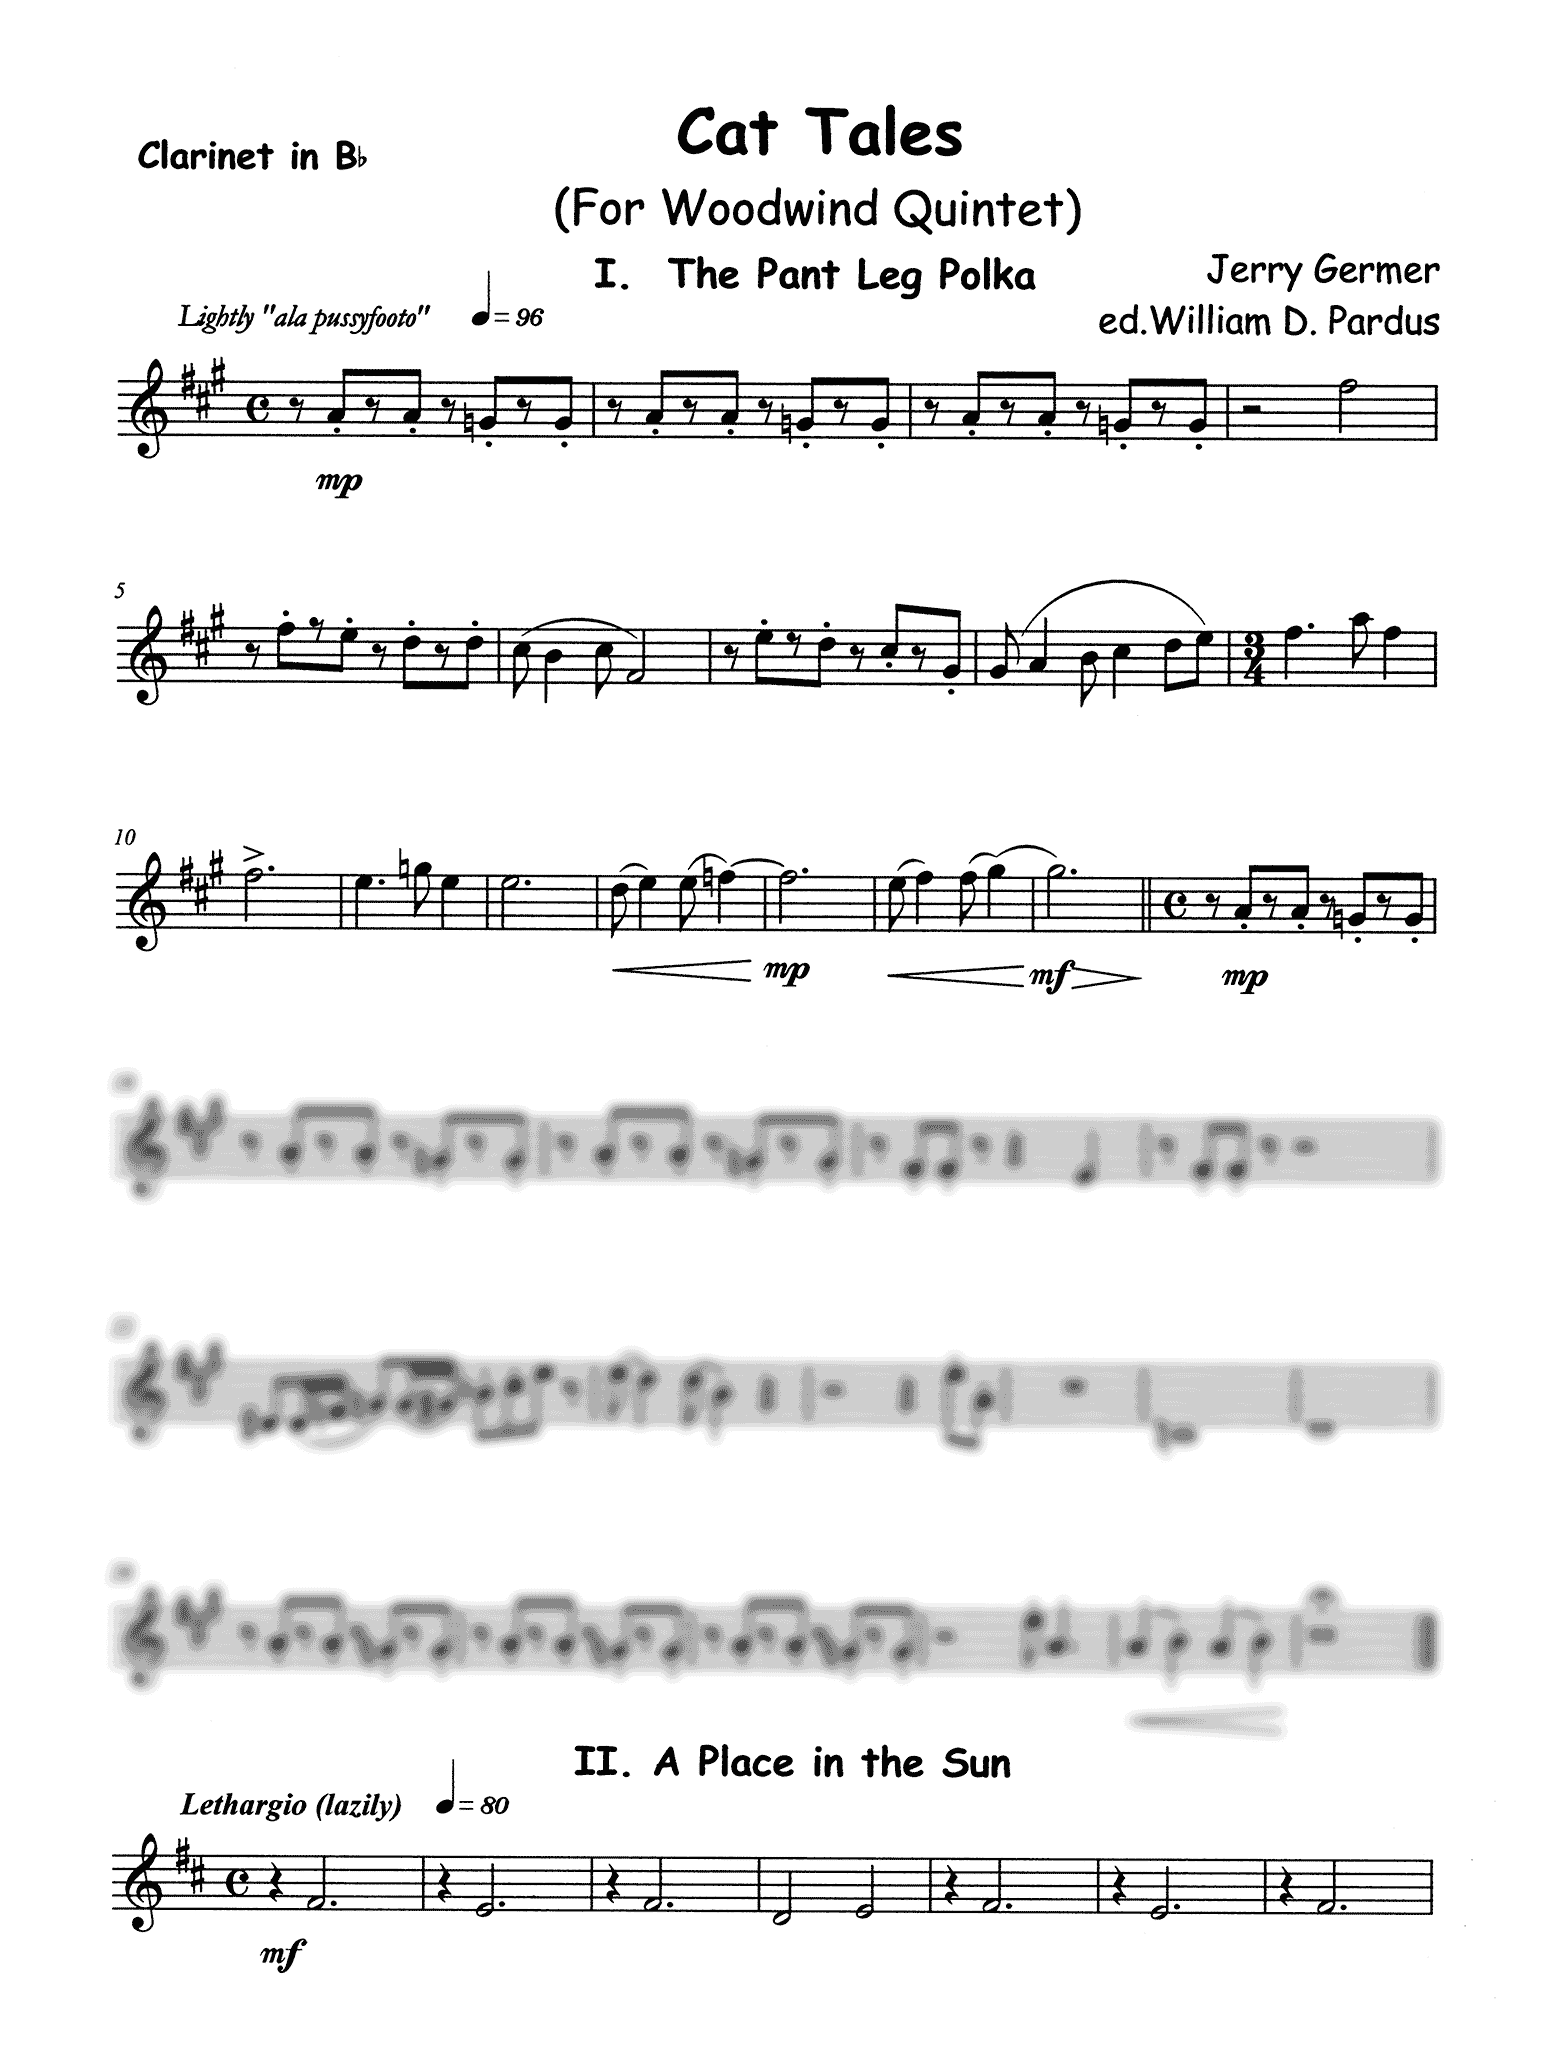 Jerry Germer Cat Tales woodwind quintet clarinet part